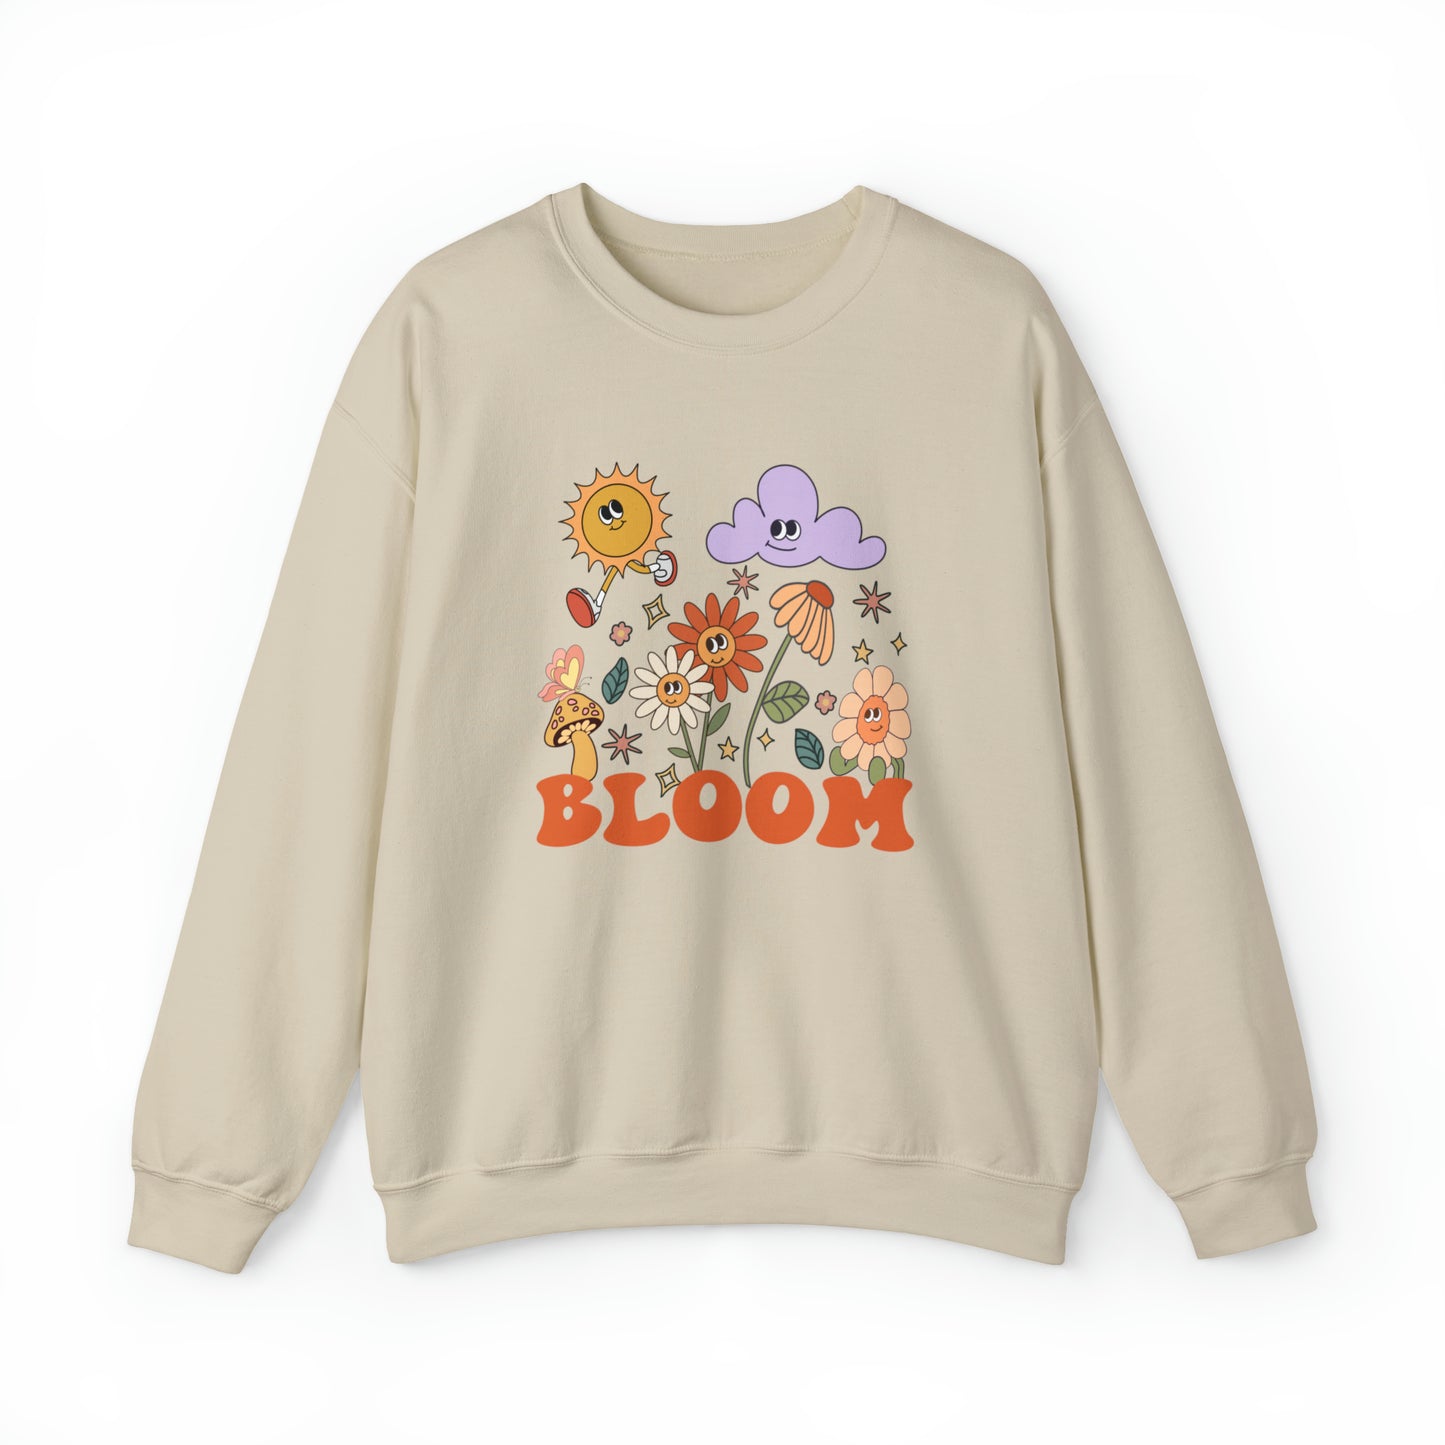 Copy of Bloom